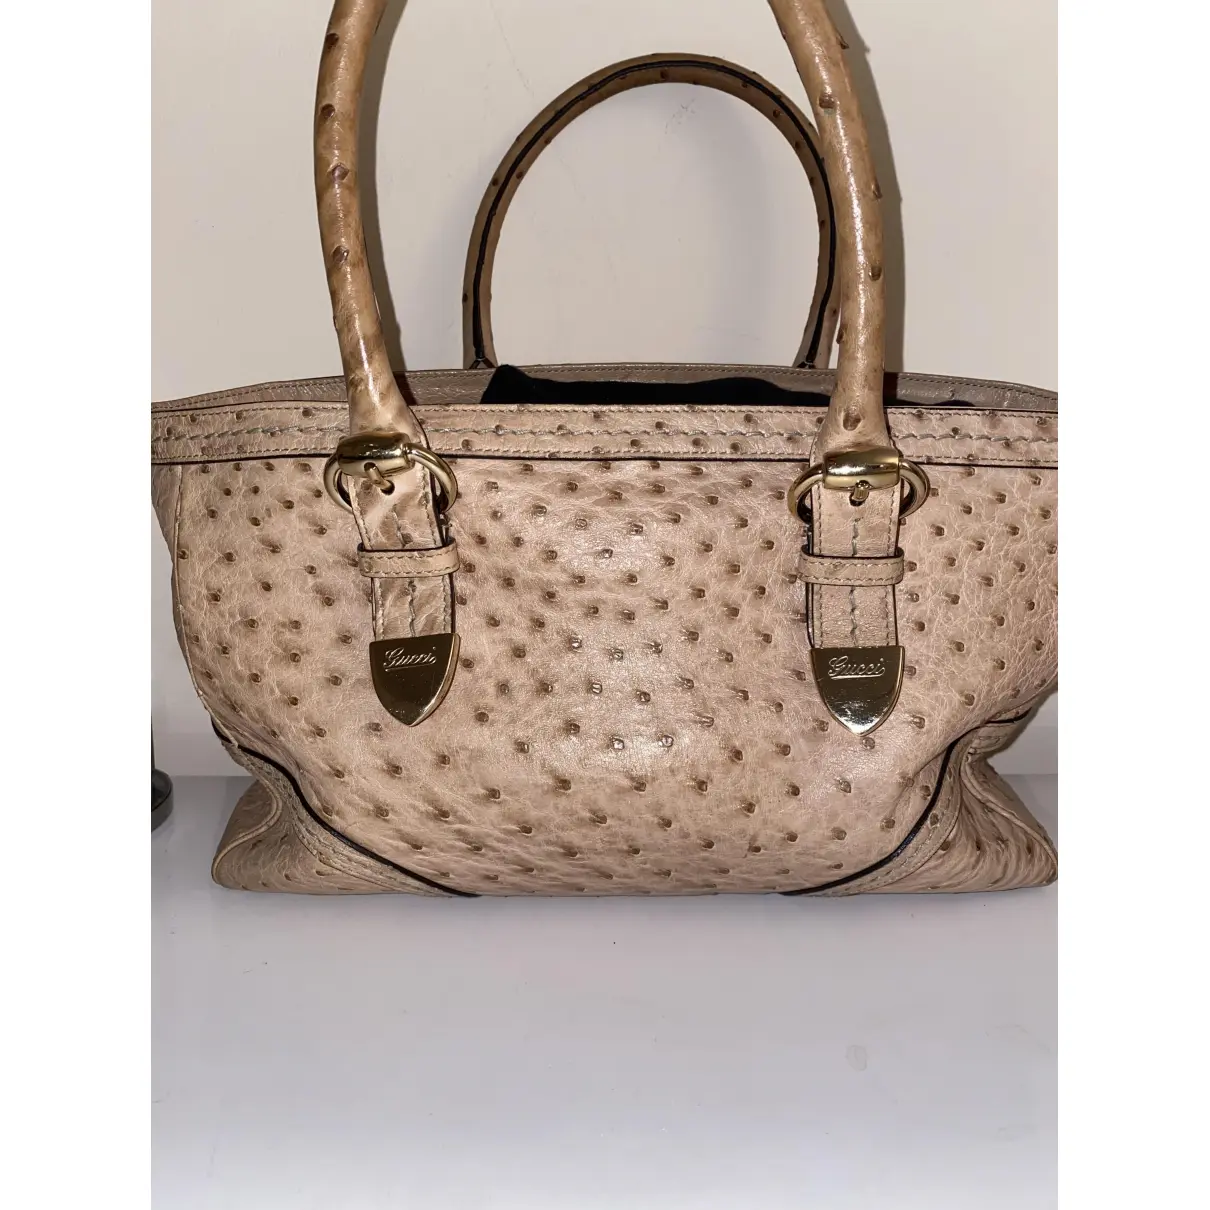 Buy Gucci Ostrich handbag online - Vintage